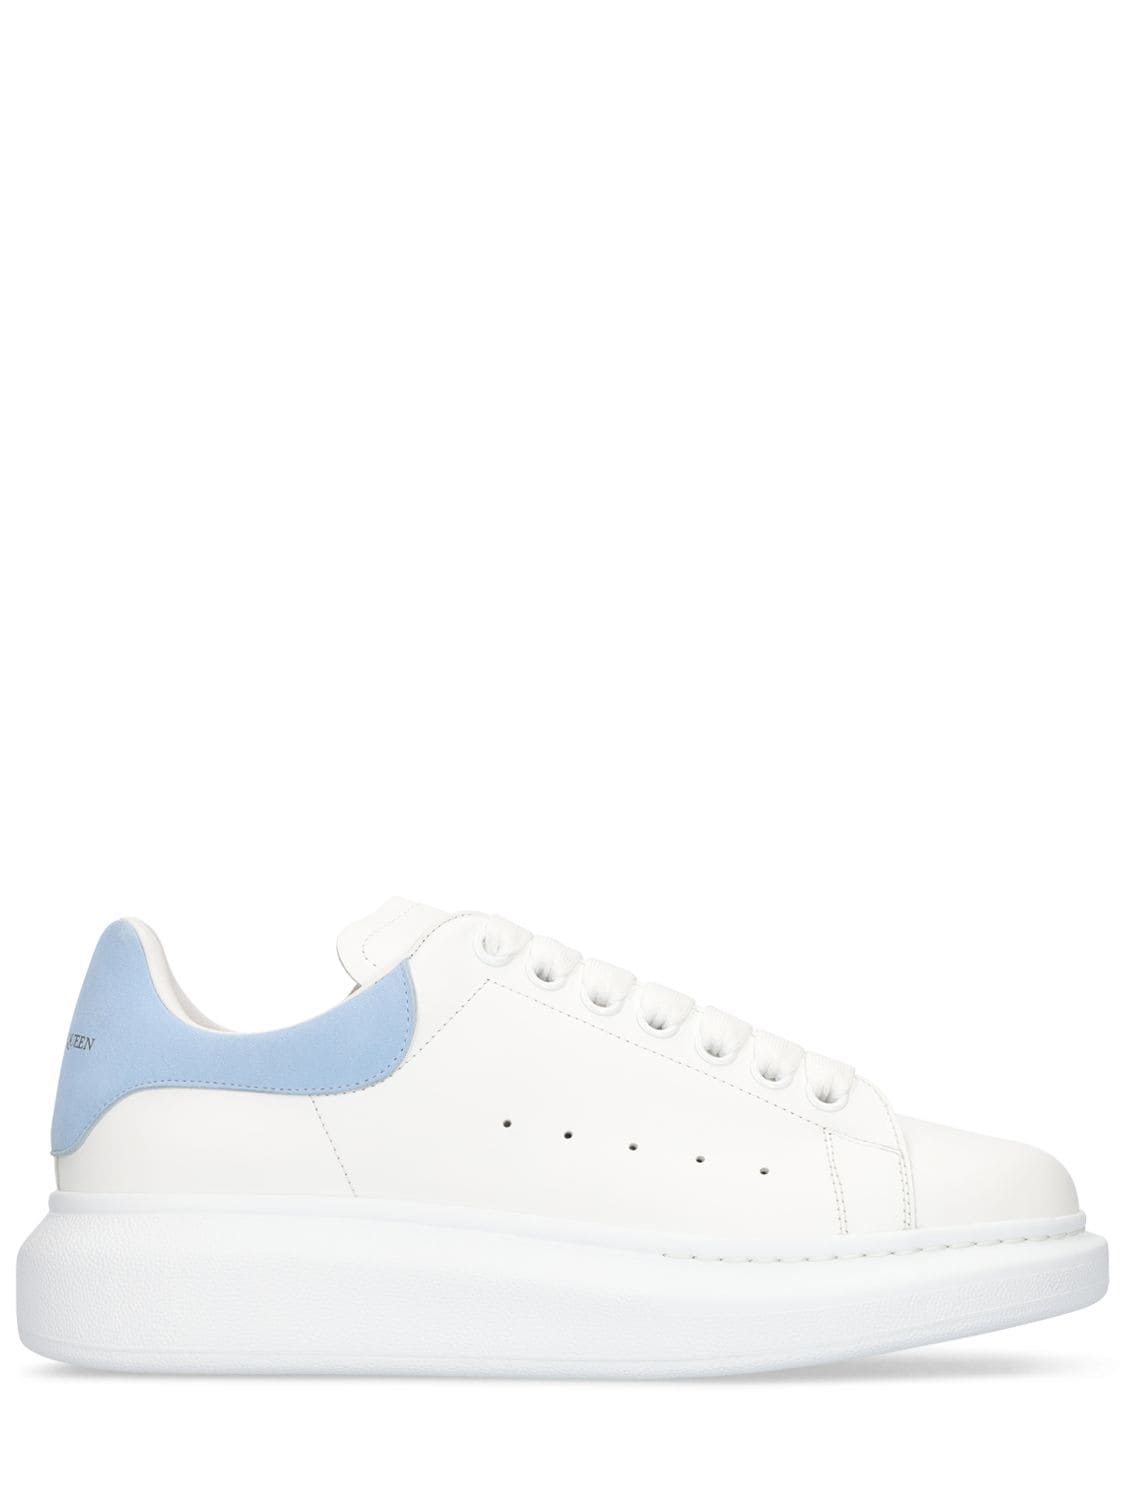 Alexander McQueen Oversized Sneaker White Blue Suede size 42.5 US 9.5  (553680)